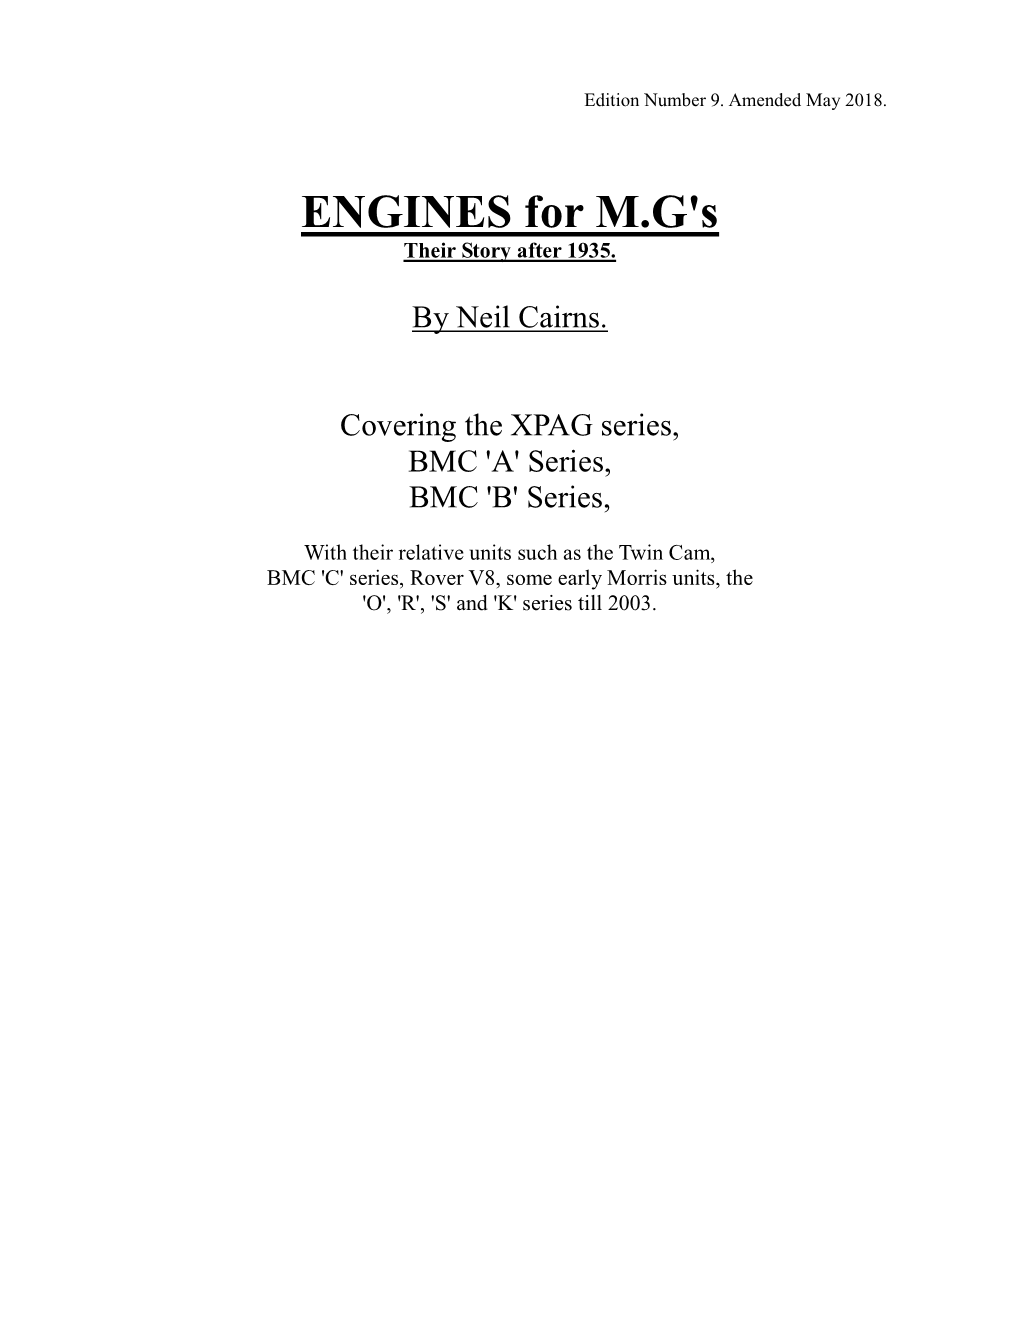 MG Engine History